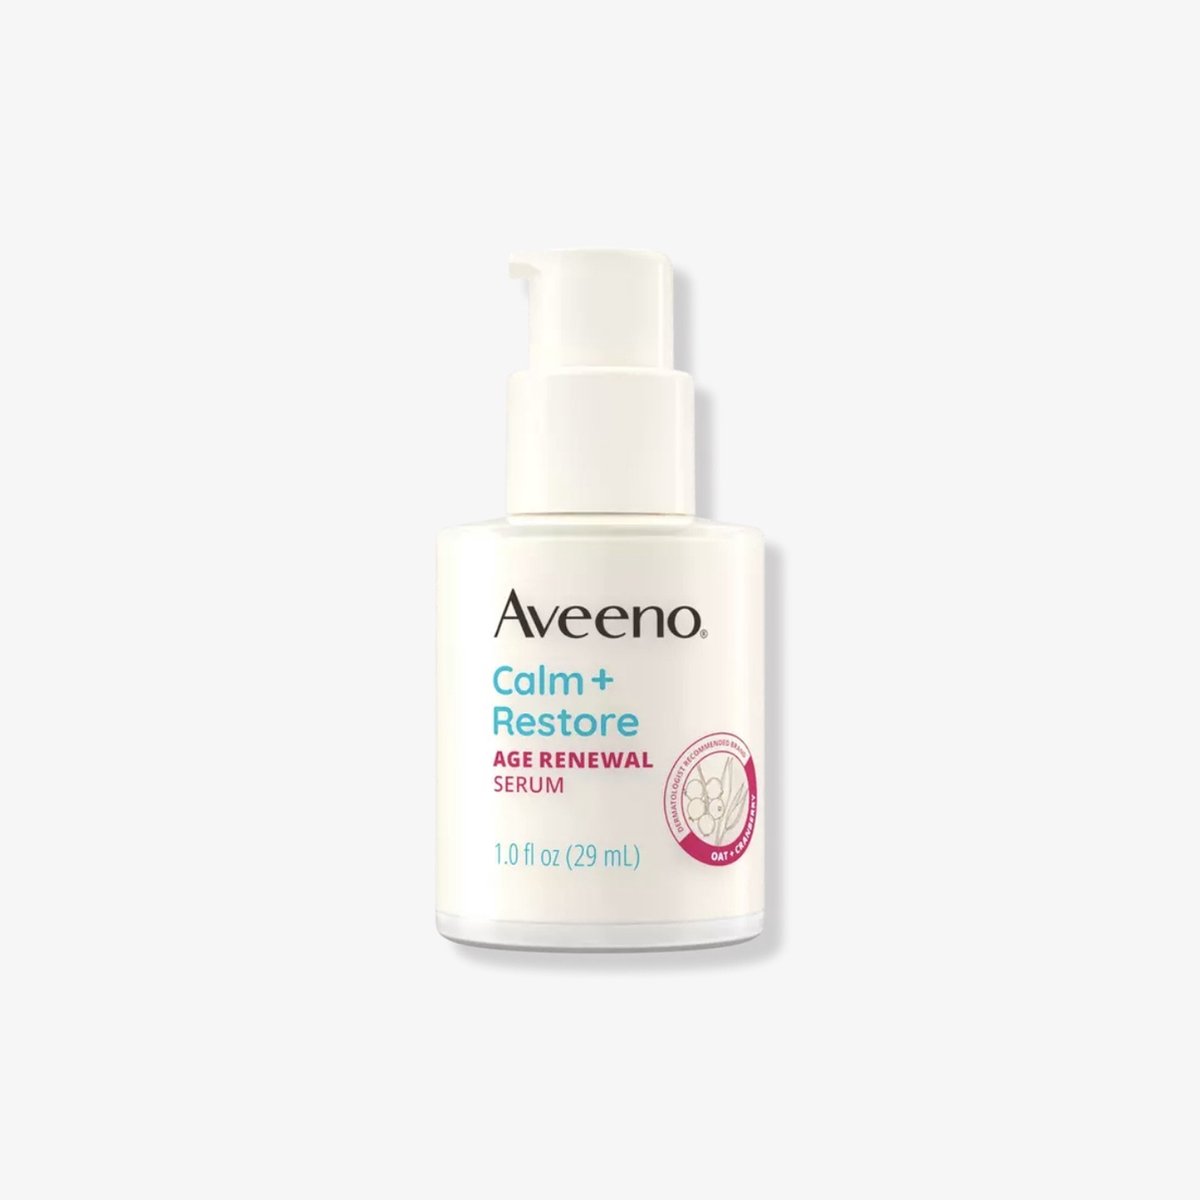 Aveeno - Calm + Restore Age Renewal Serum for Sensitive Skin, Fragrance Free - 29ml